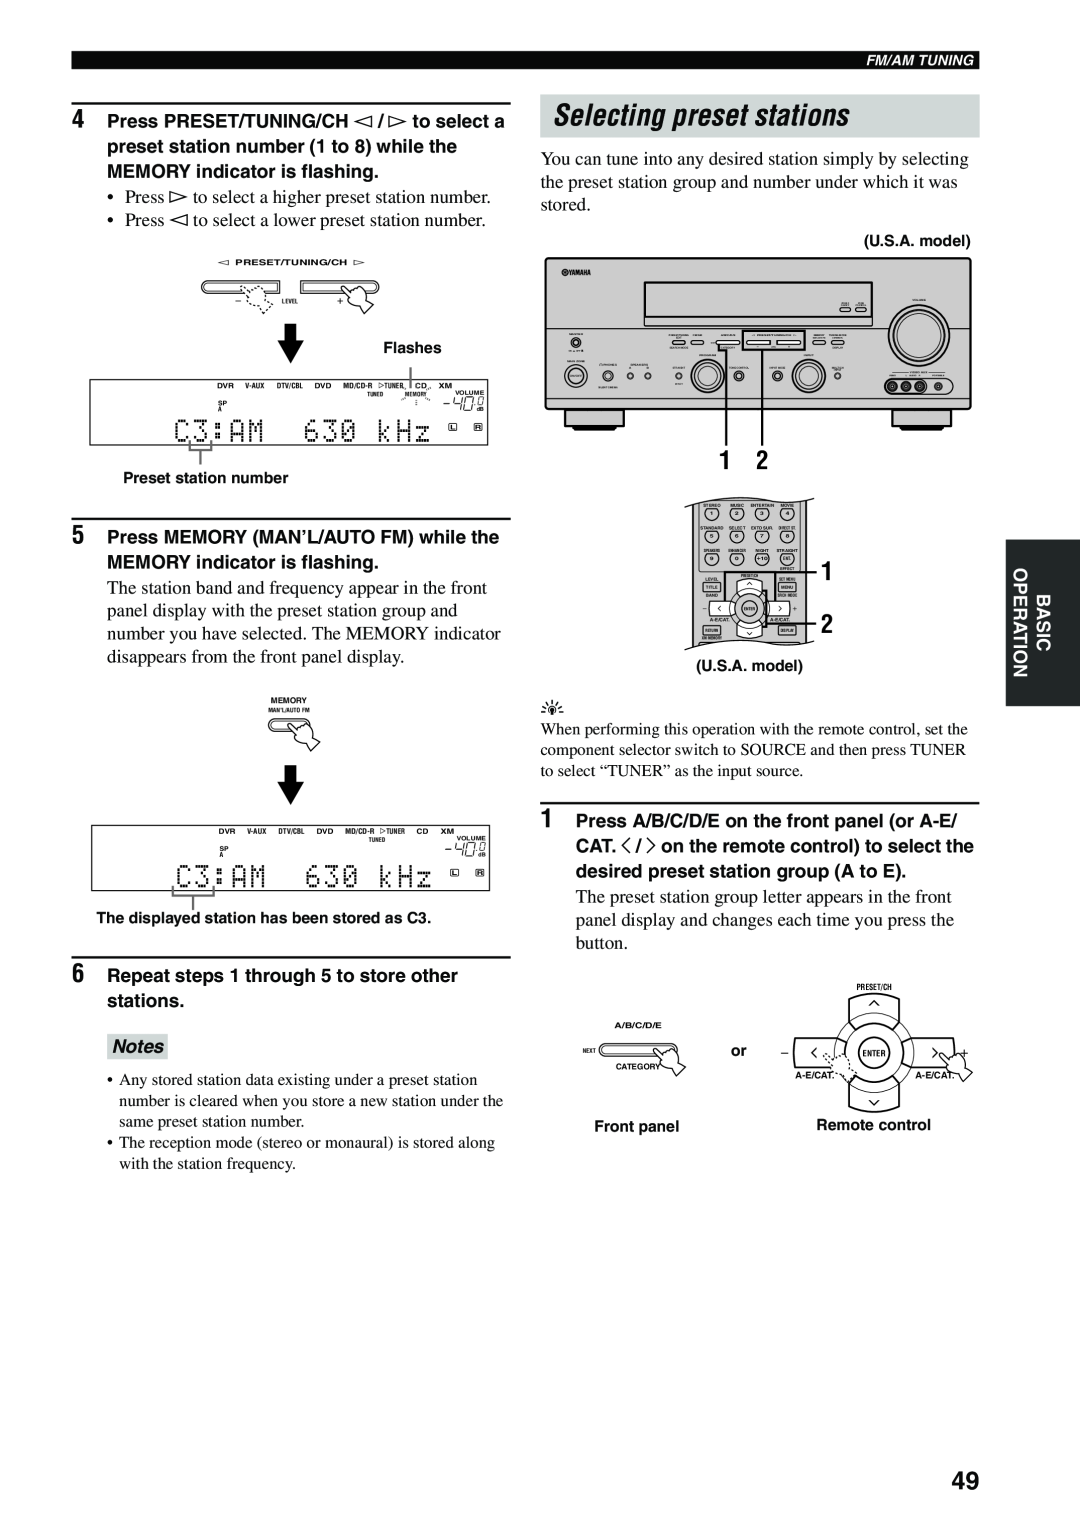 Yamaha RX-V559 owner manual Selecting preset stations, C3:AM 630 kHz L R, Notes 